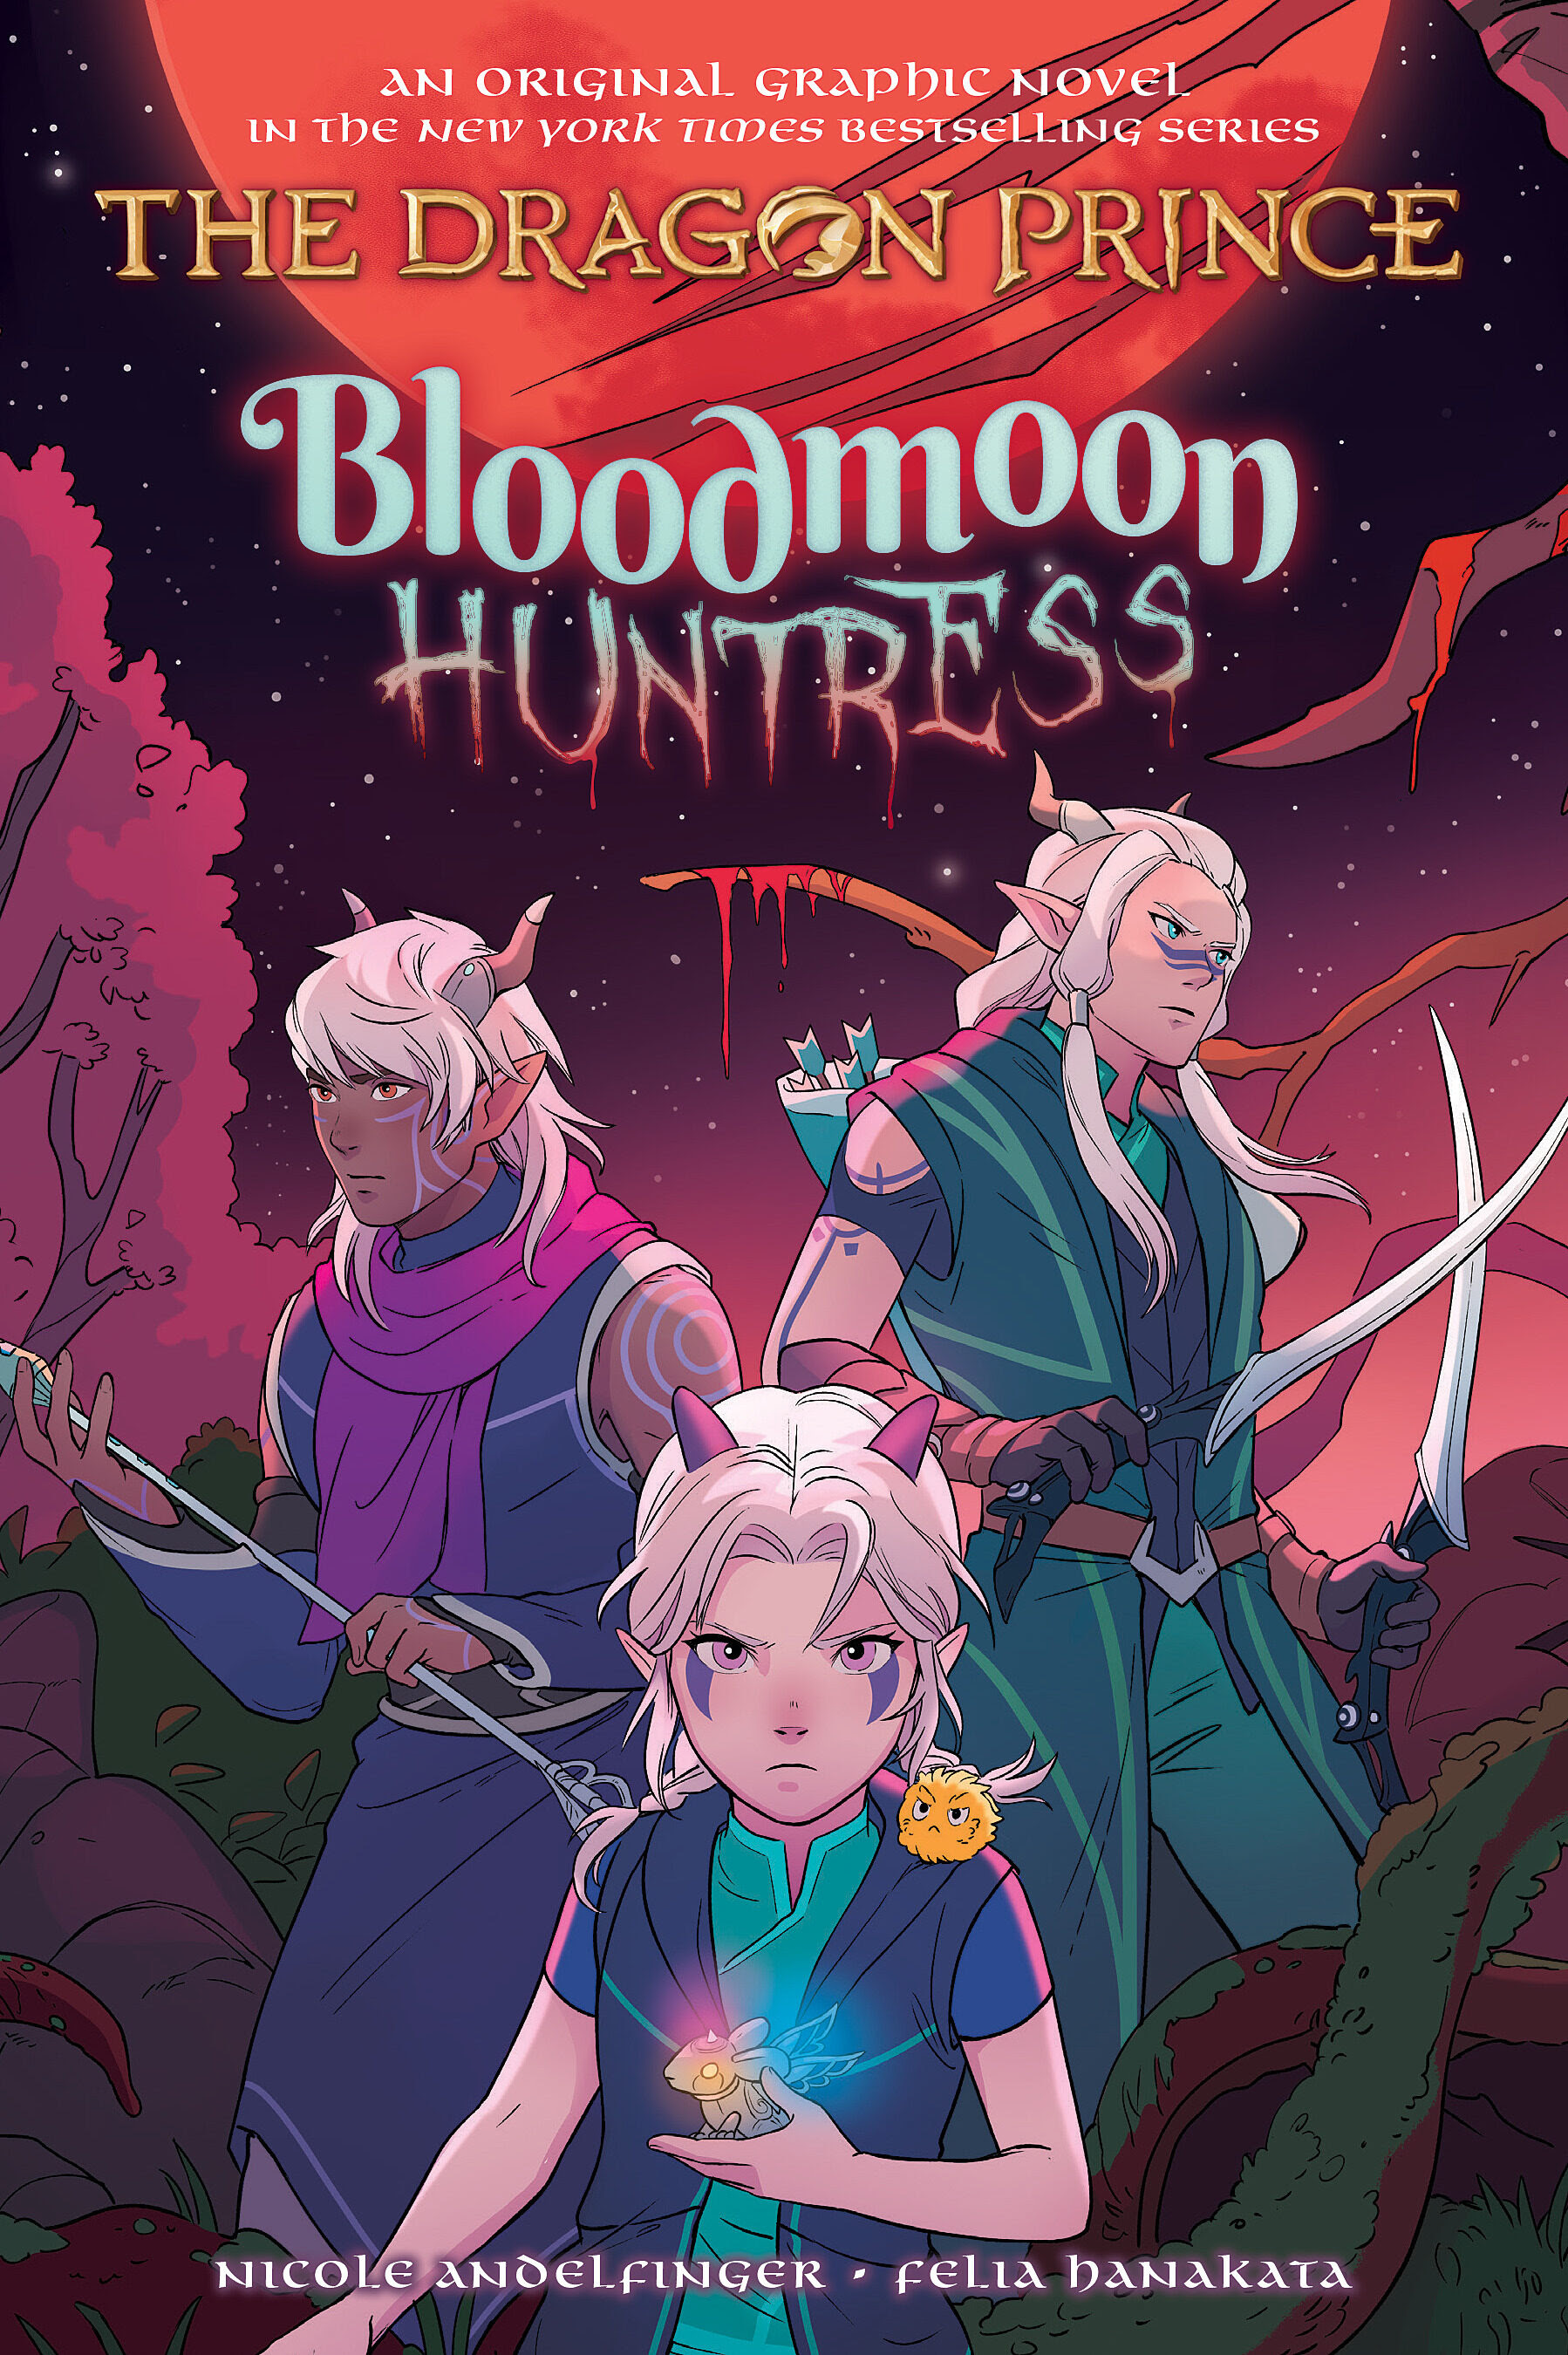 pdf download Bloodmoon Huntress: A Graphic Novel (The Dragon Prince Graphic Novel #2)